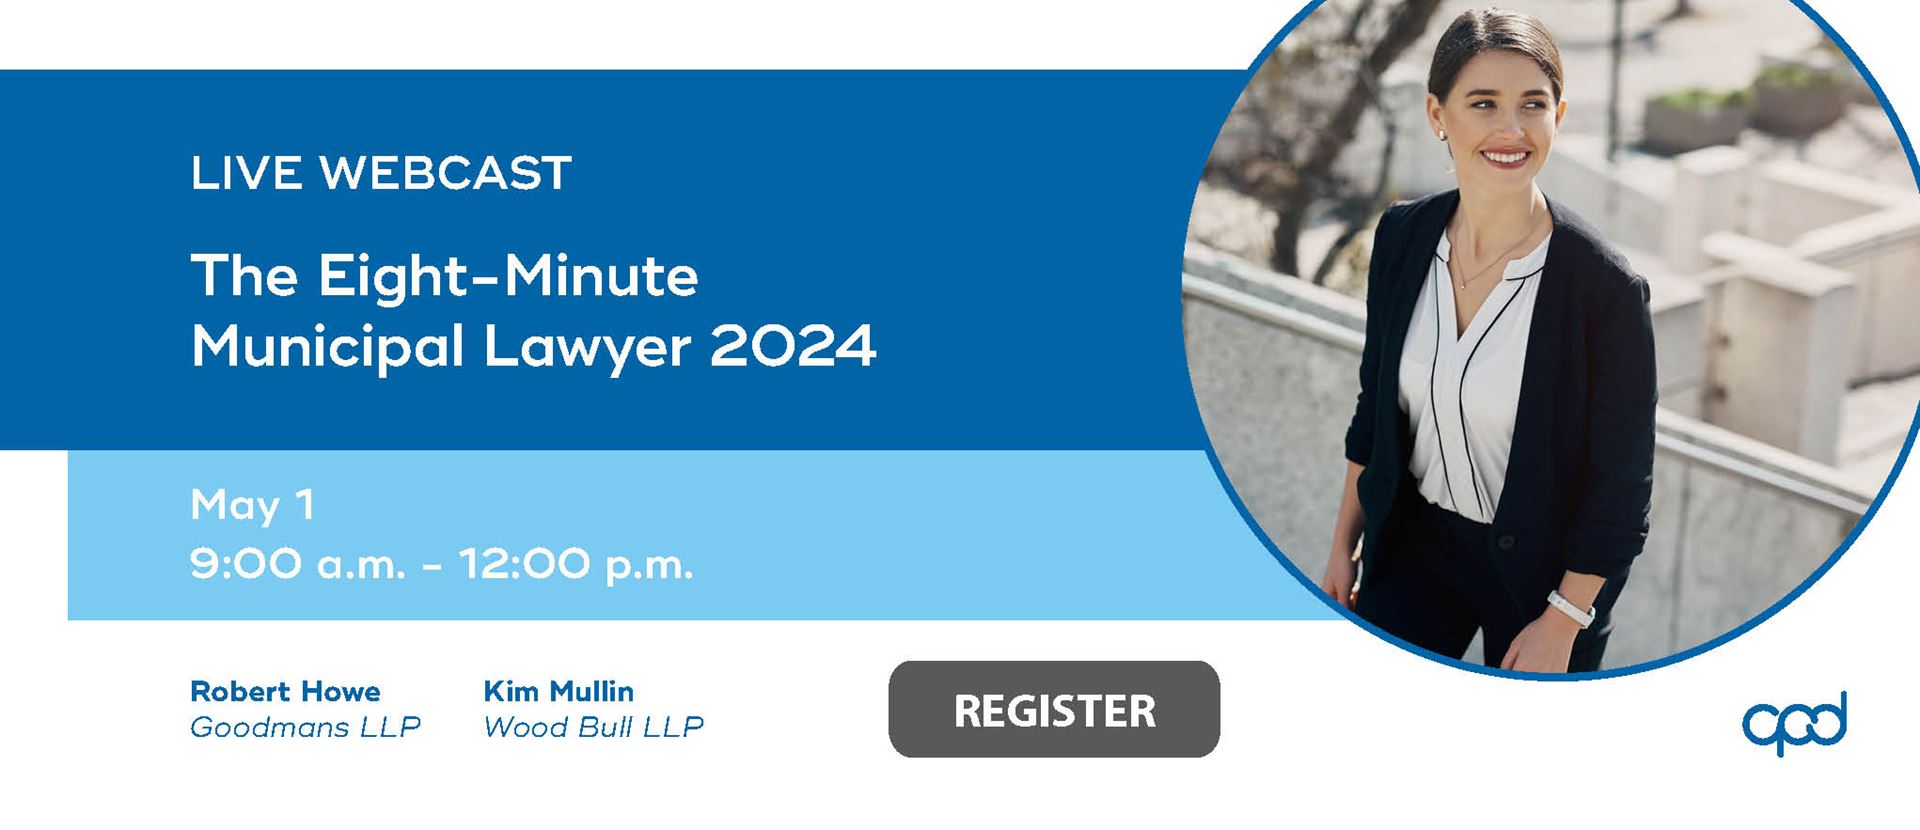 The Eight-Minute Municipal Lawyer 2024